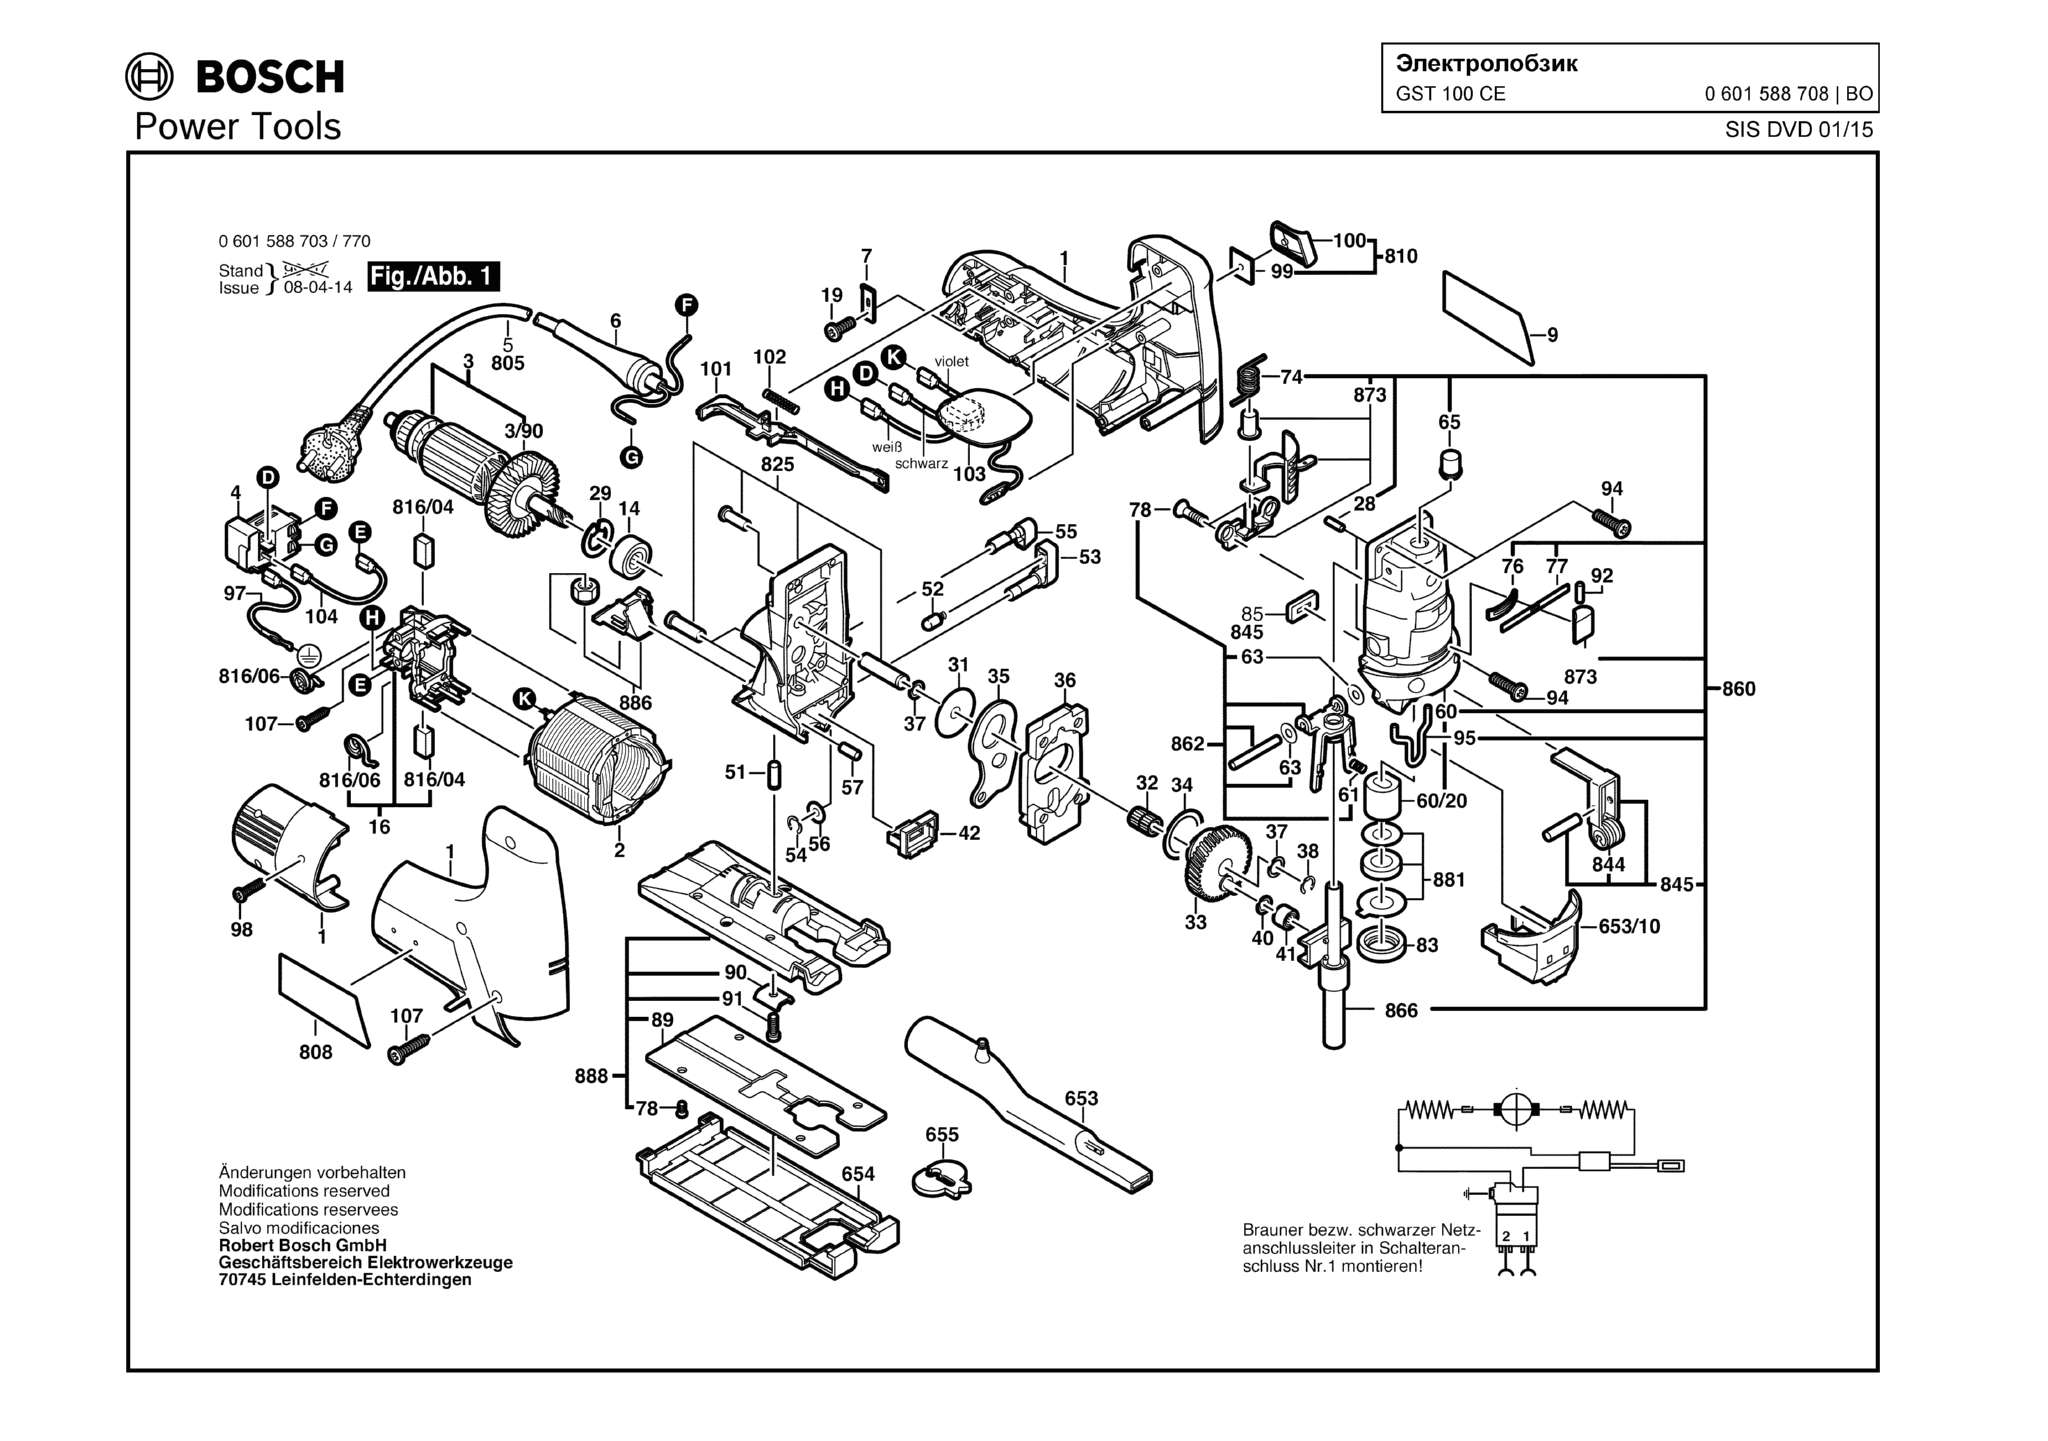 Запчасти, схема и деталировка Bosch GST 100 CE (ТИП 0601588708)